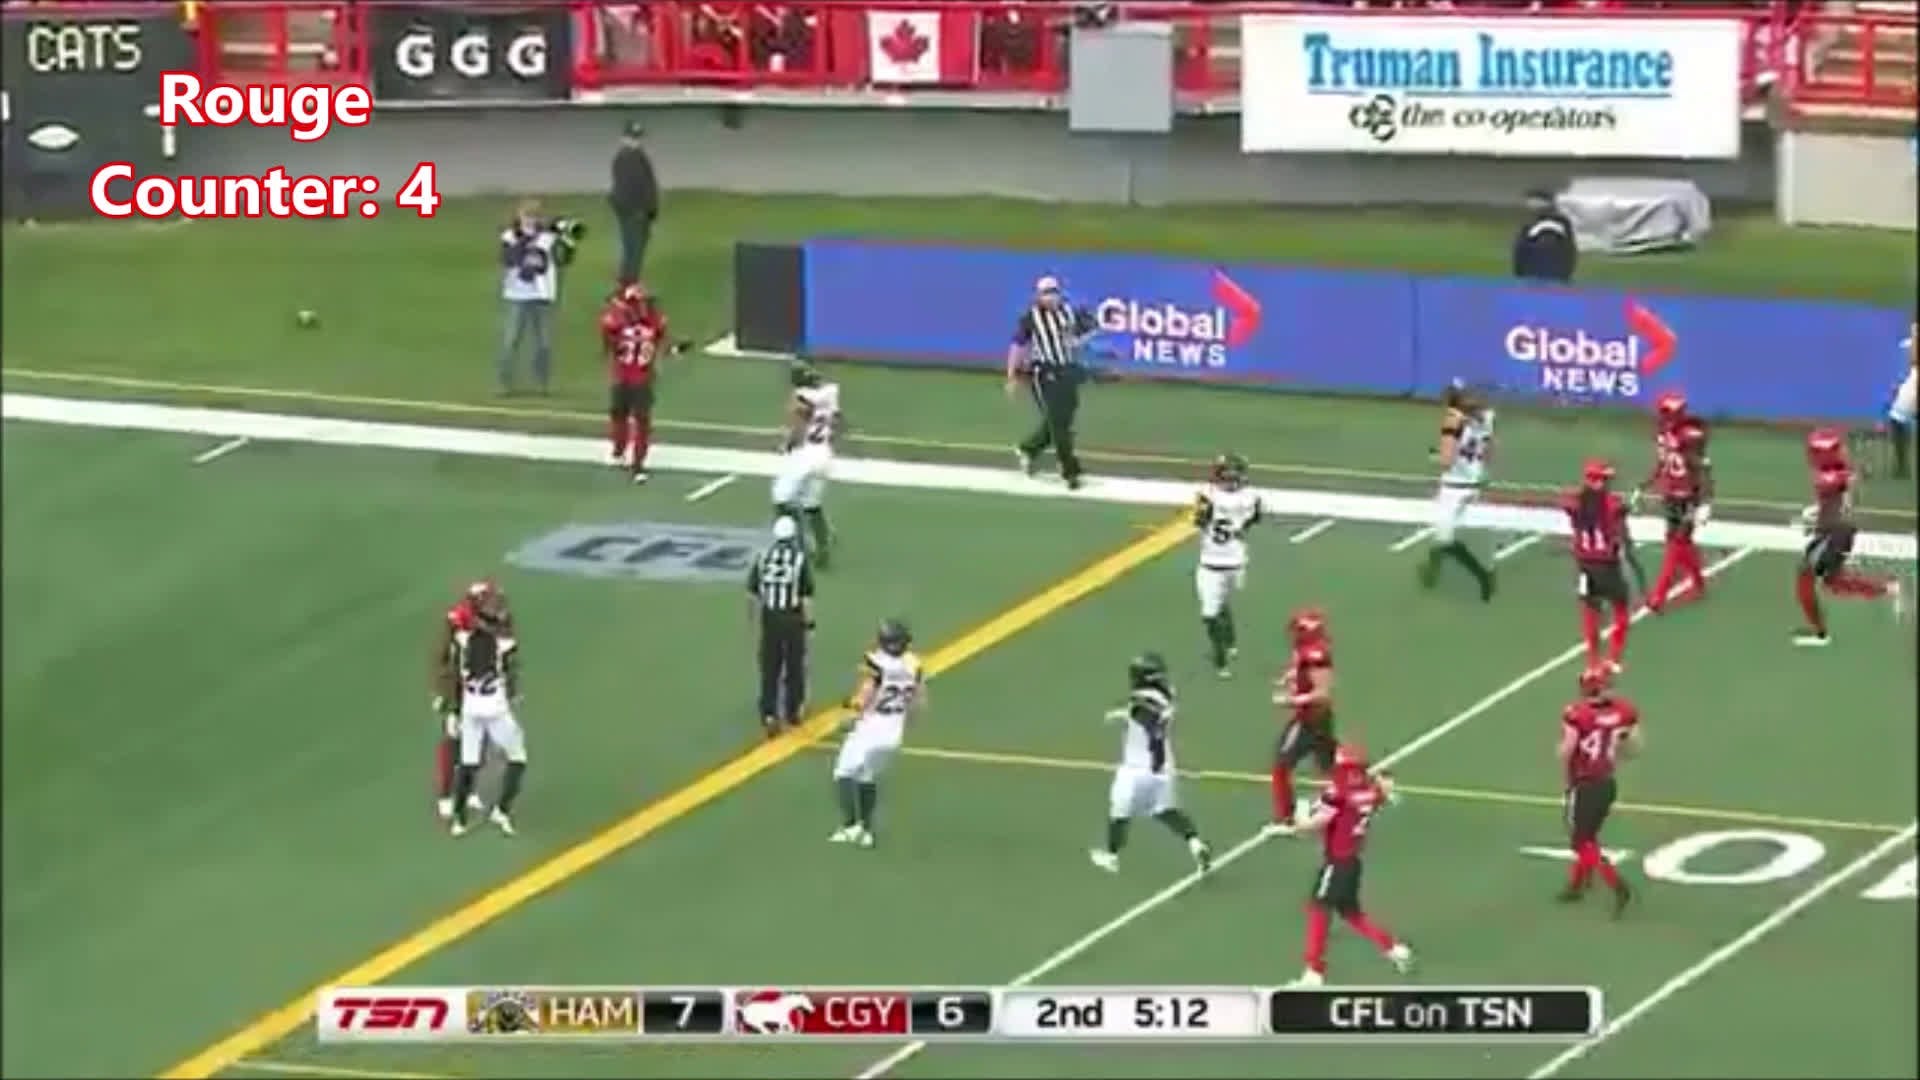 Canadian Football Game Between Plays